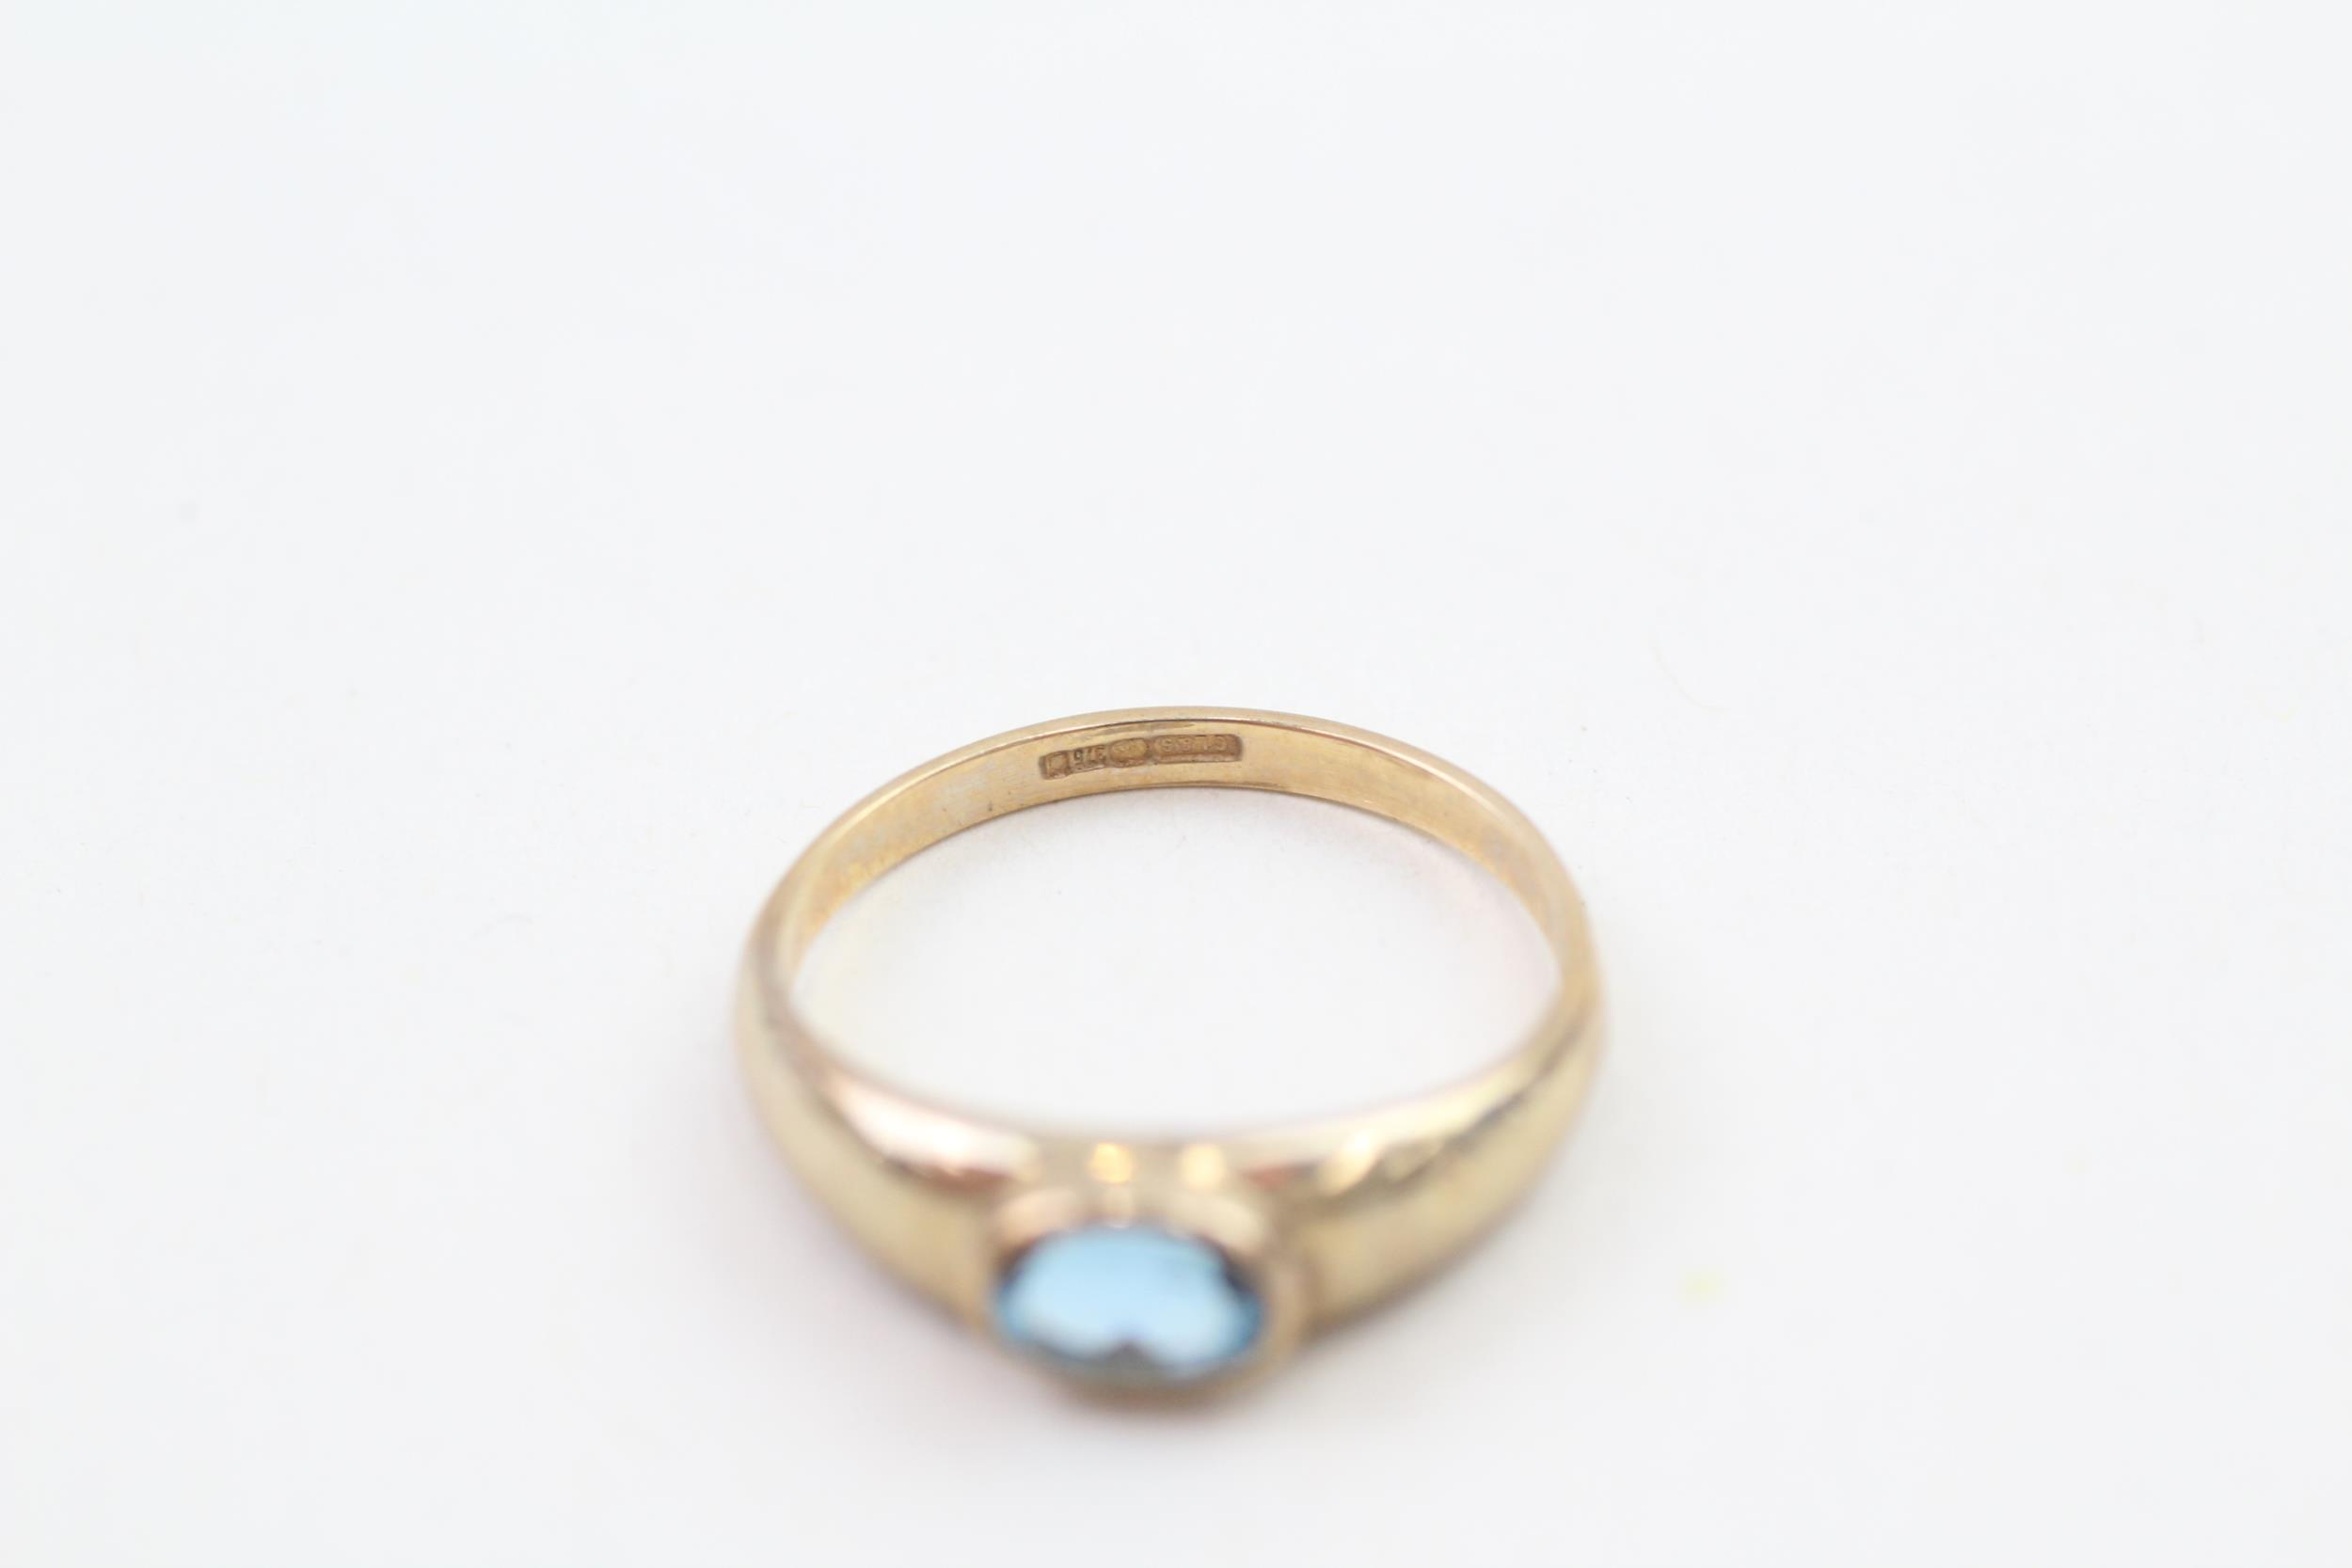 9ct gold oval cut blue topaz ring, bezel set (1.6g) Size L 1/2 - Image 2 of 4